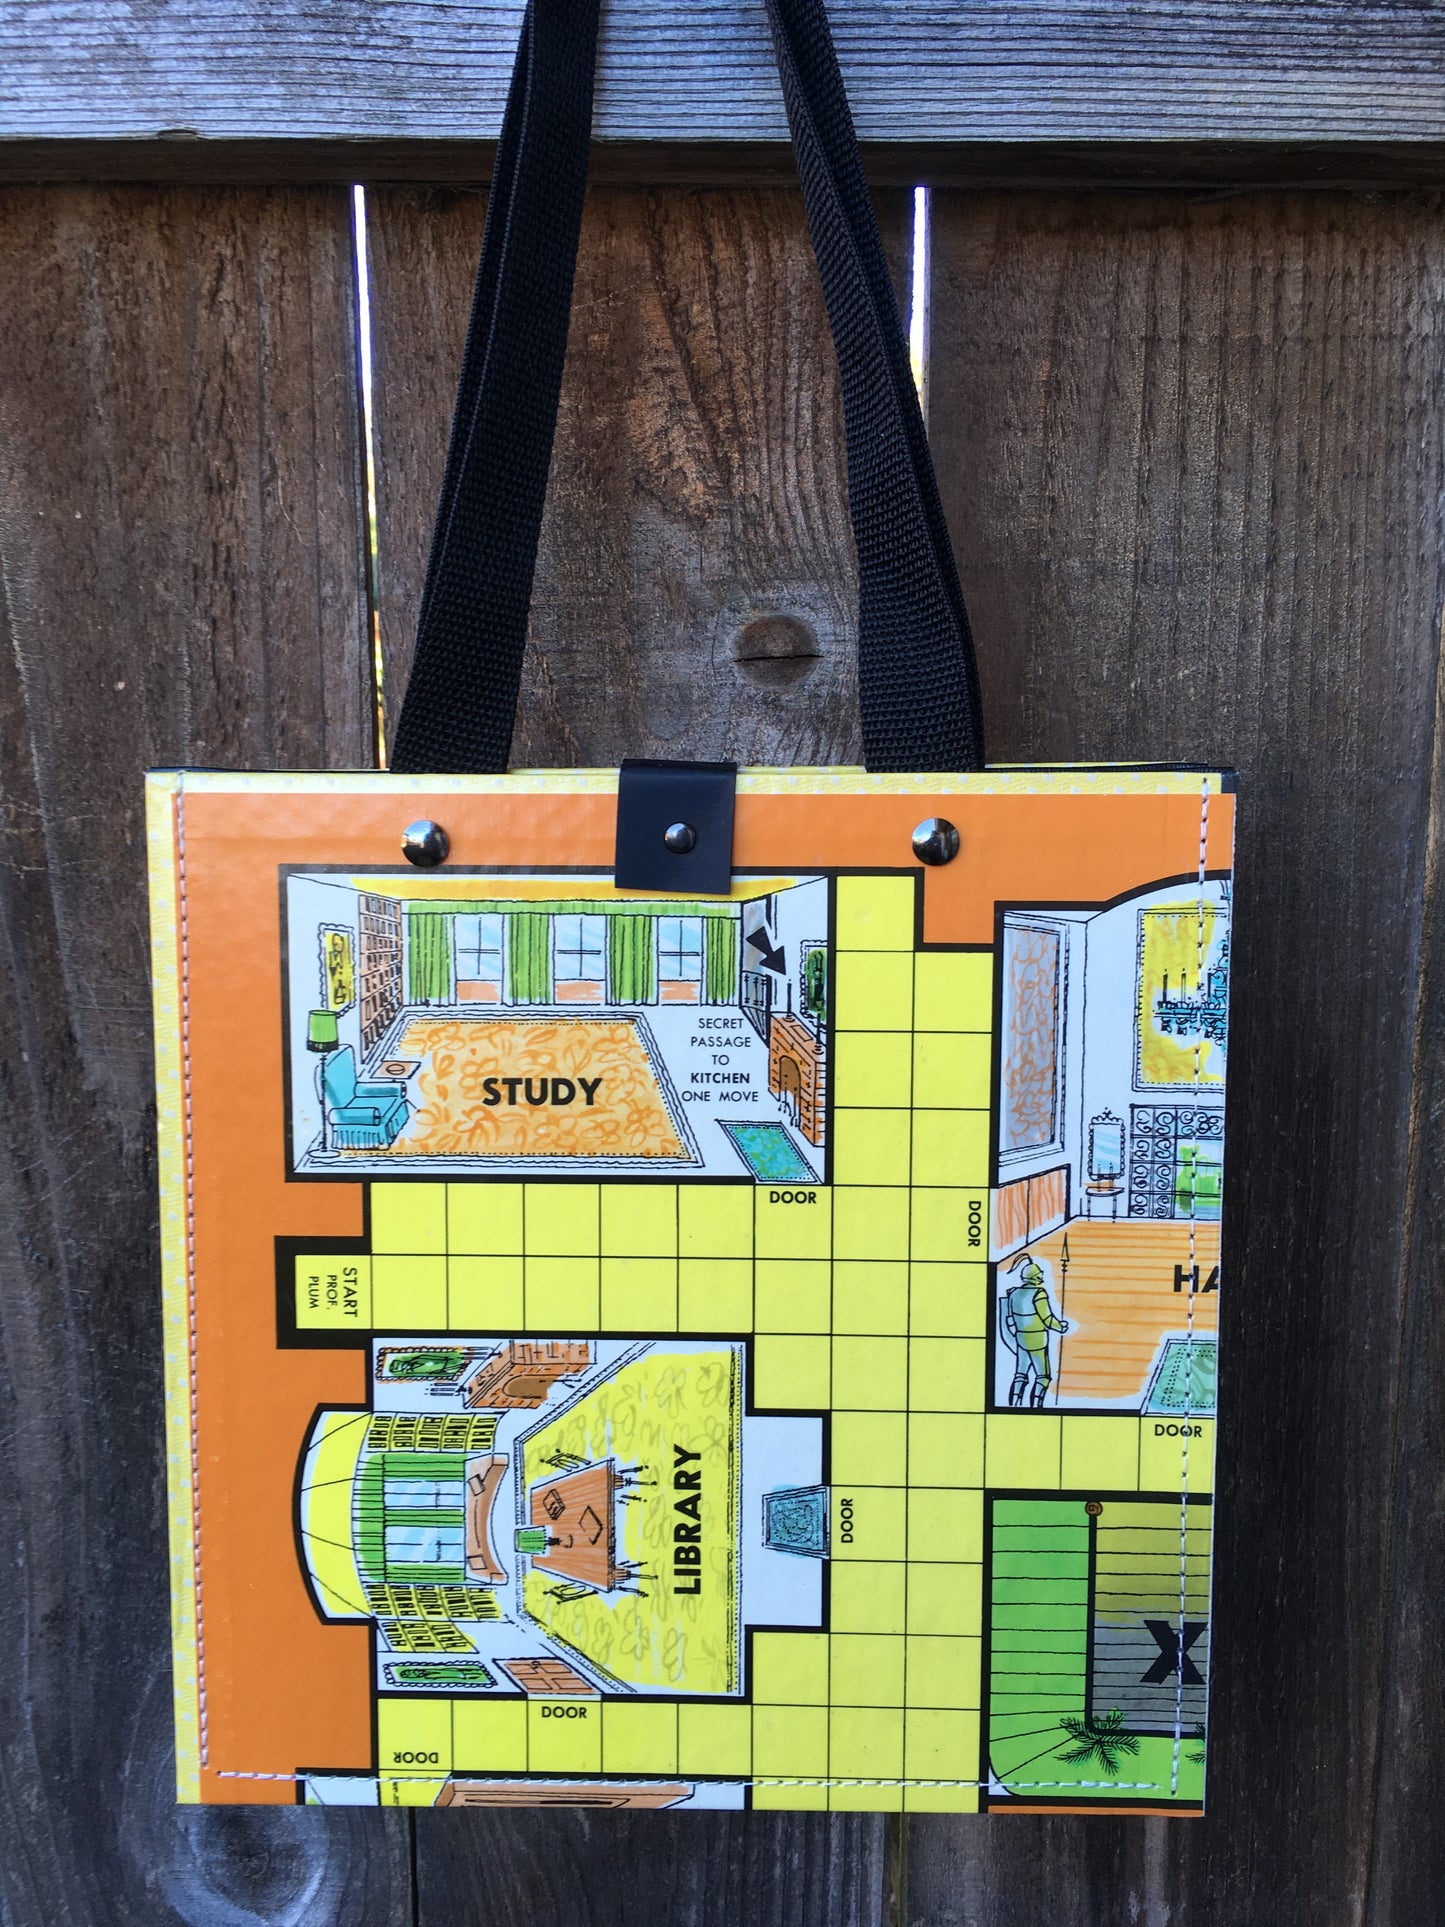 Gameboard Bag - Clue